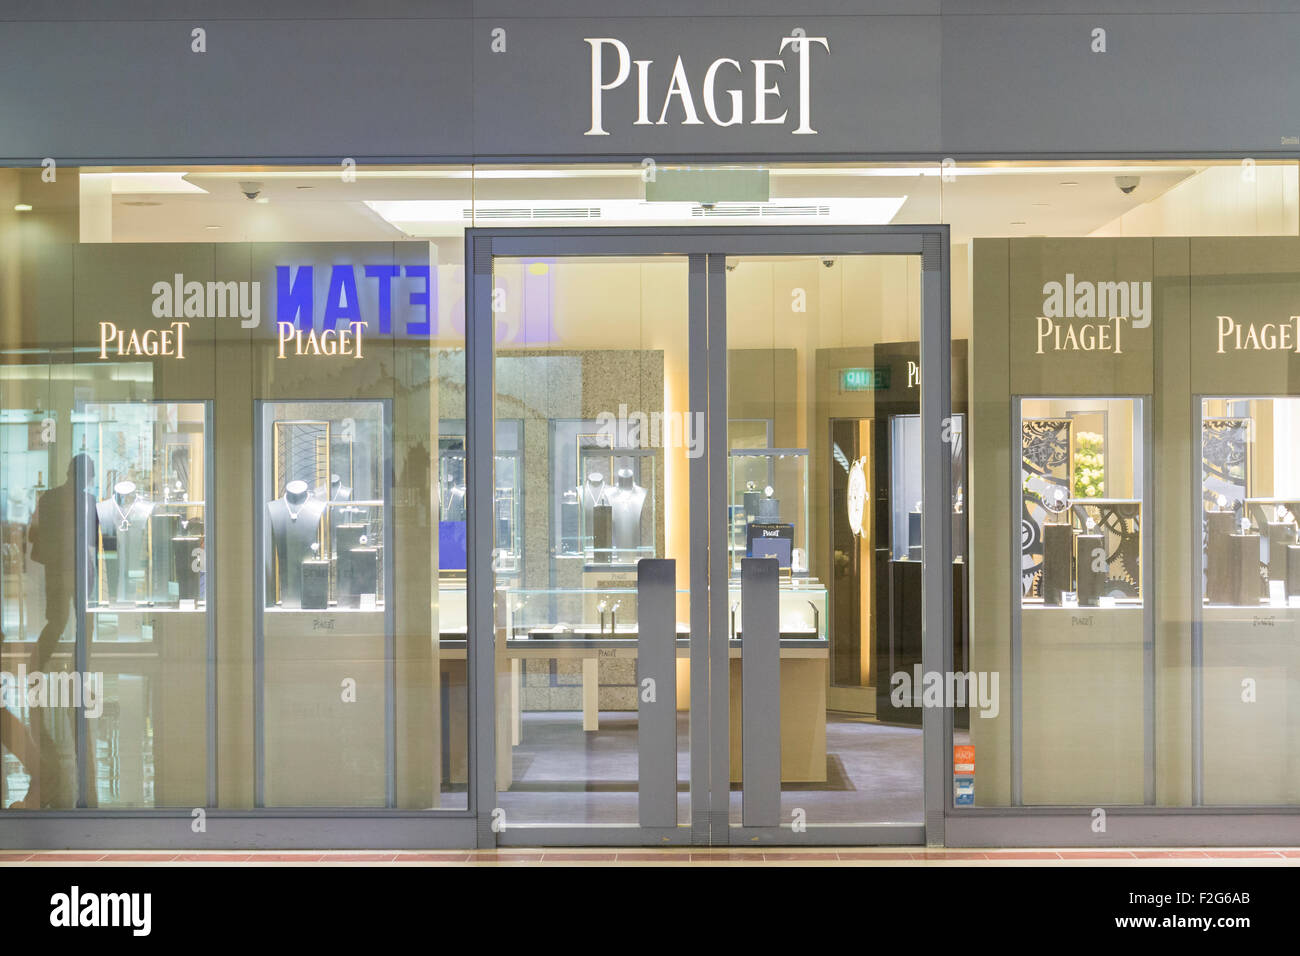 Piaget store Stock Photo